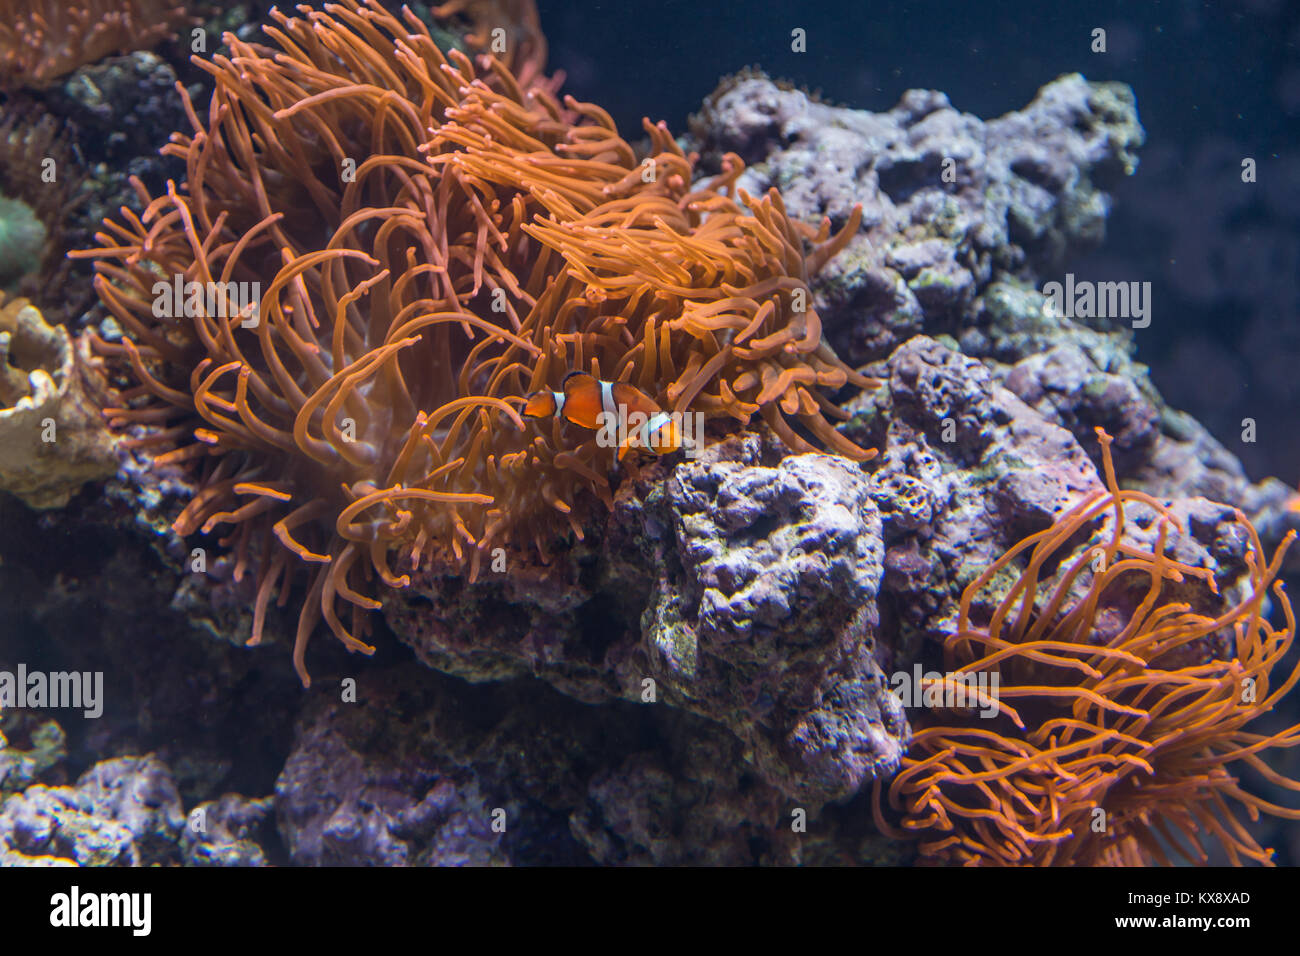 Orange Bubble-tip Anemone and Little Clownfish, Amphiprion Ocellaris, inside Aquarium Stock Photo